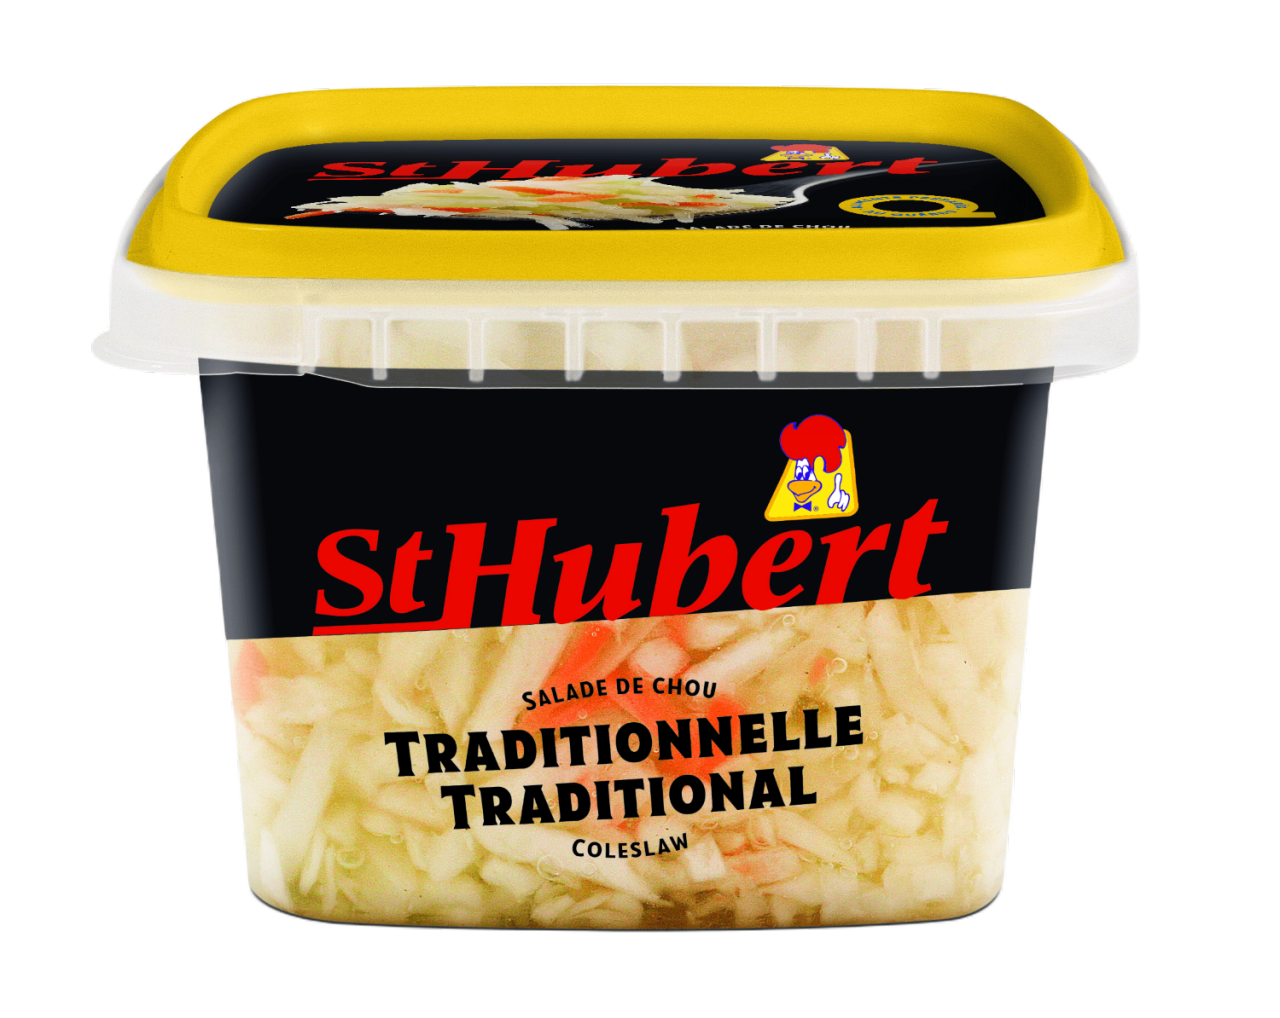 St-Hubert traditional coleslaw